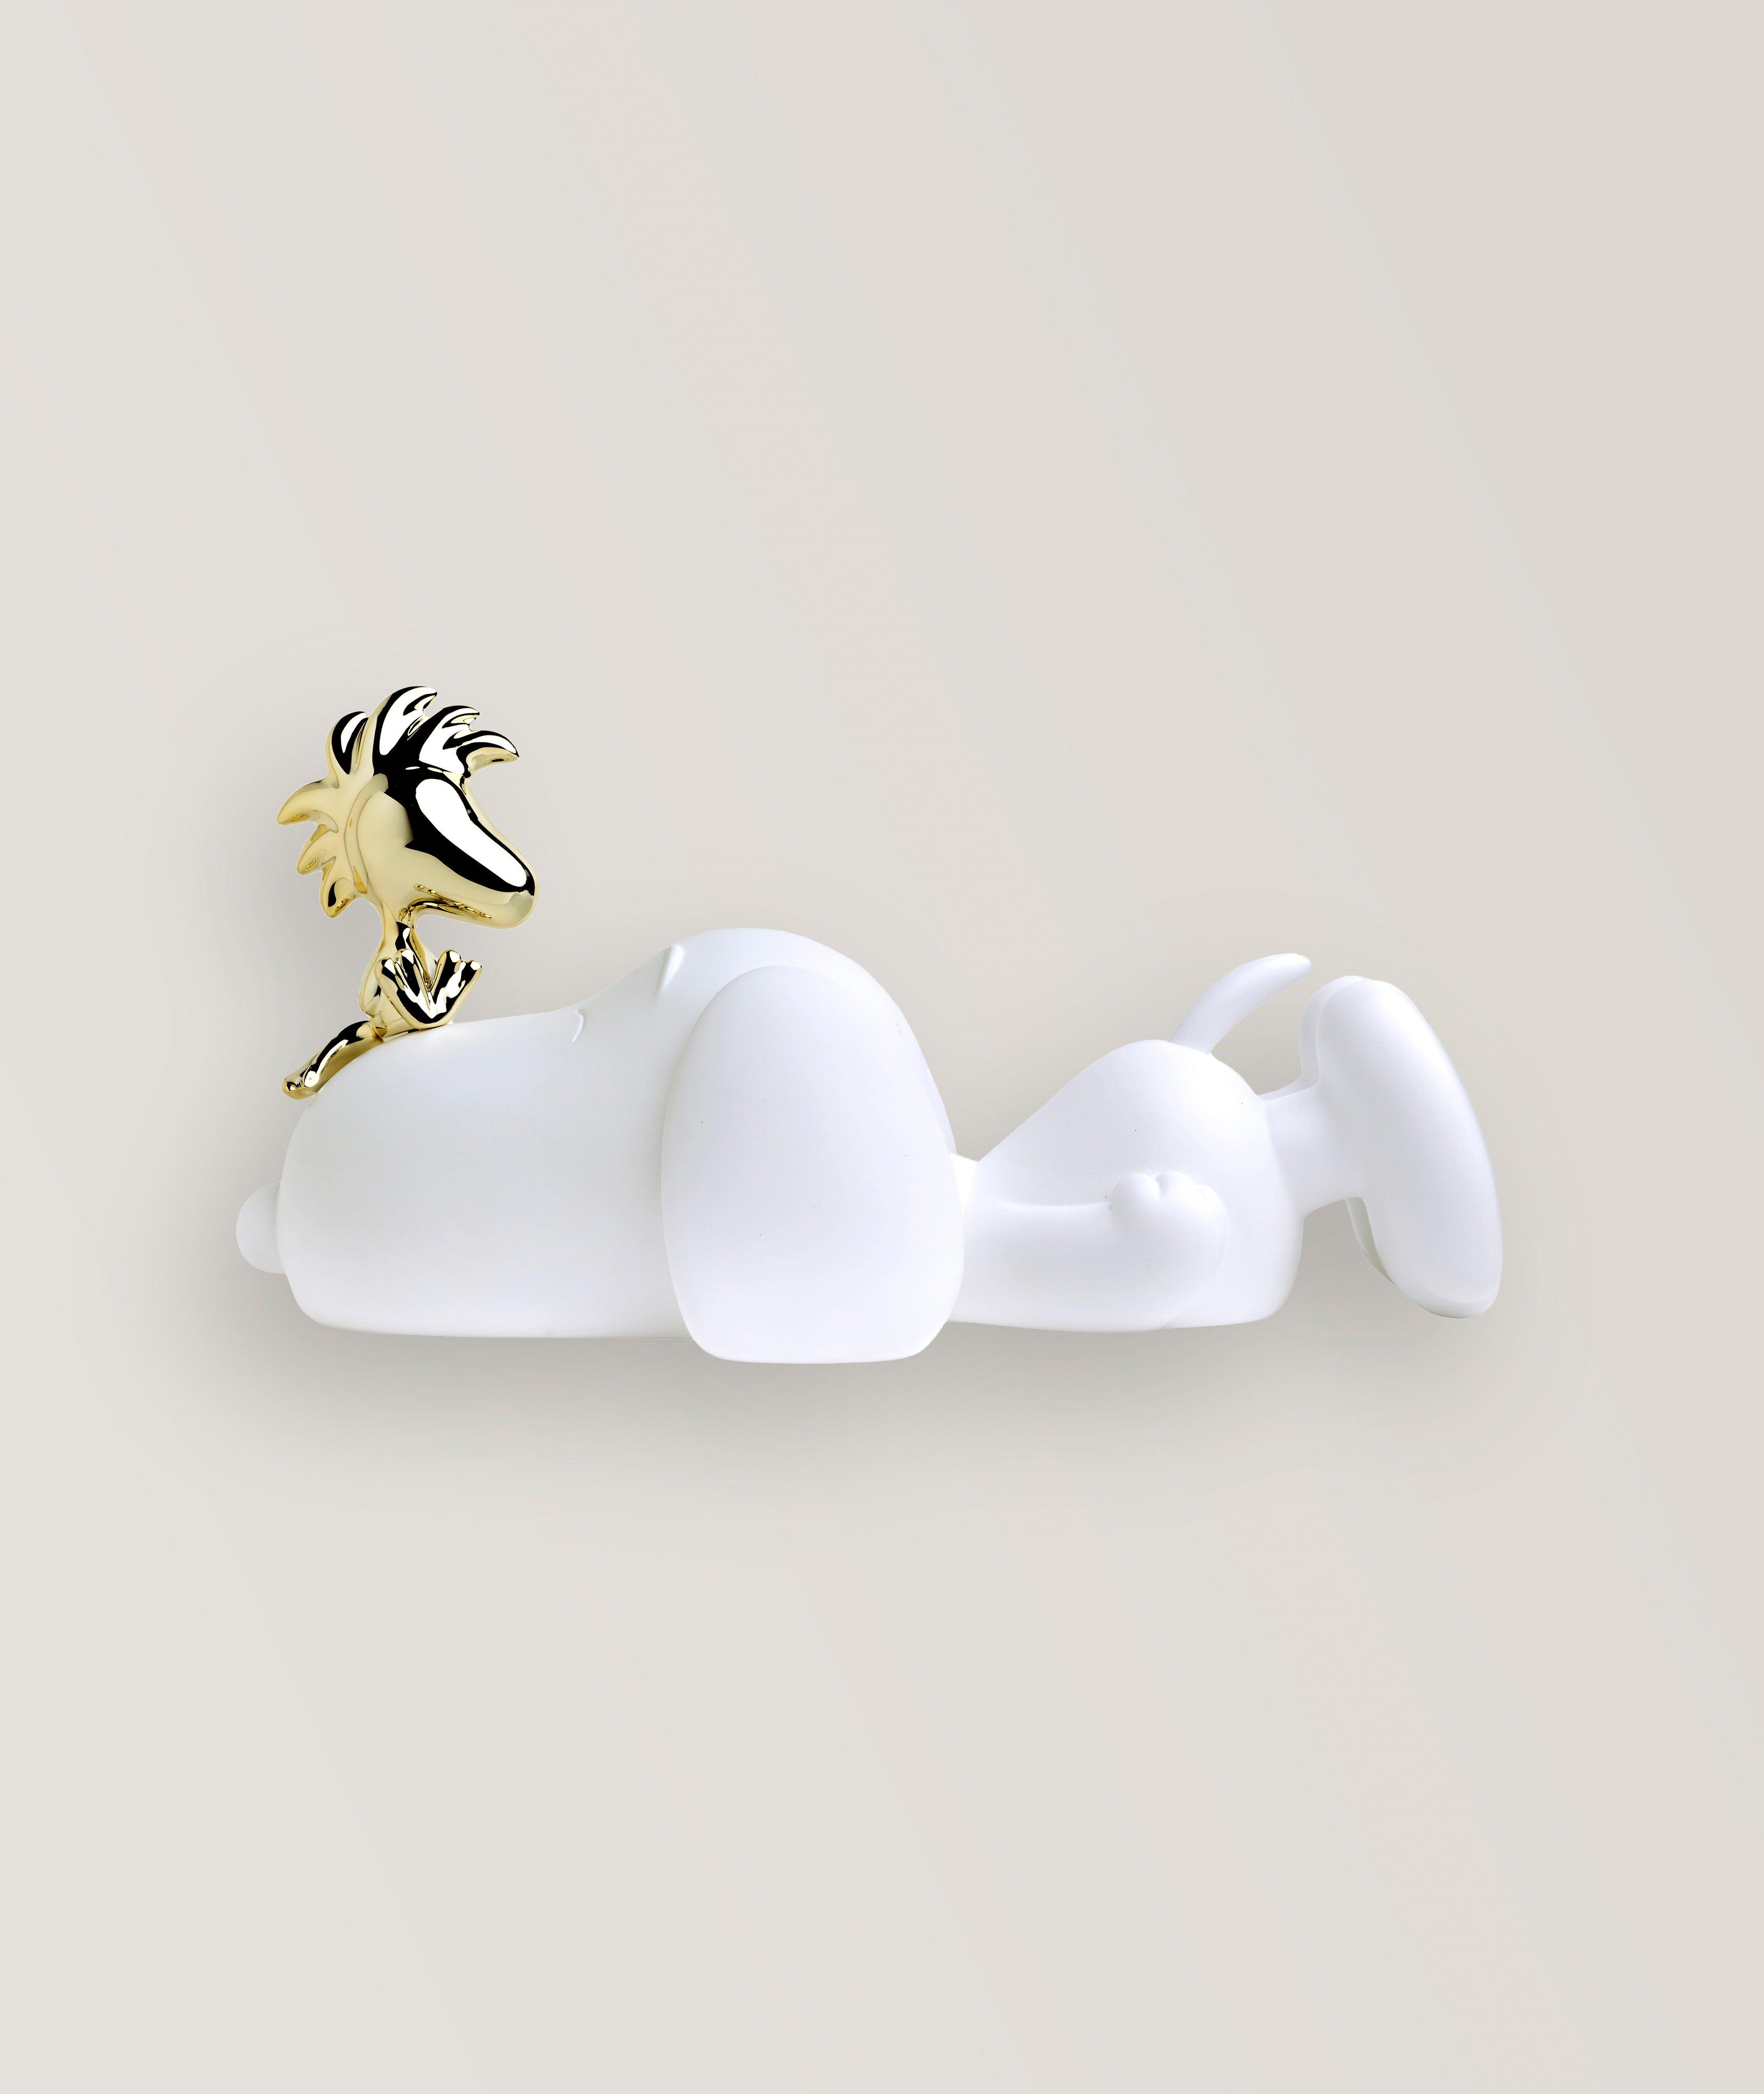 Figurine Snoopy et Woodstock image 0